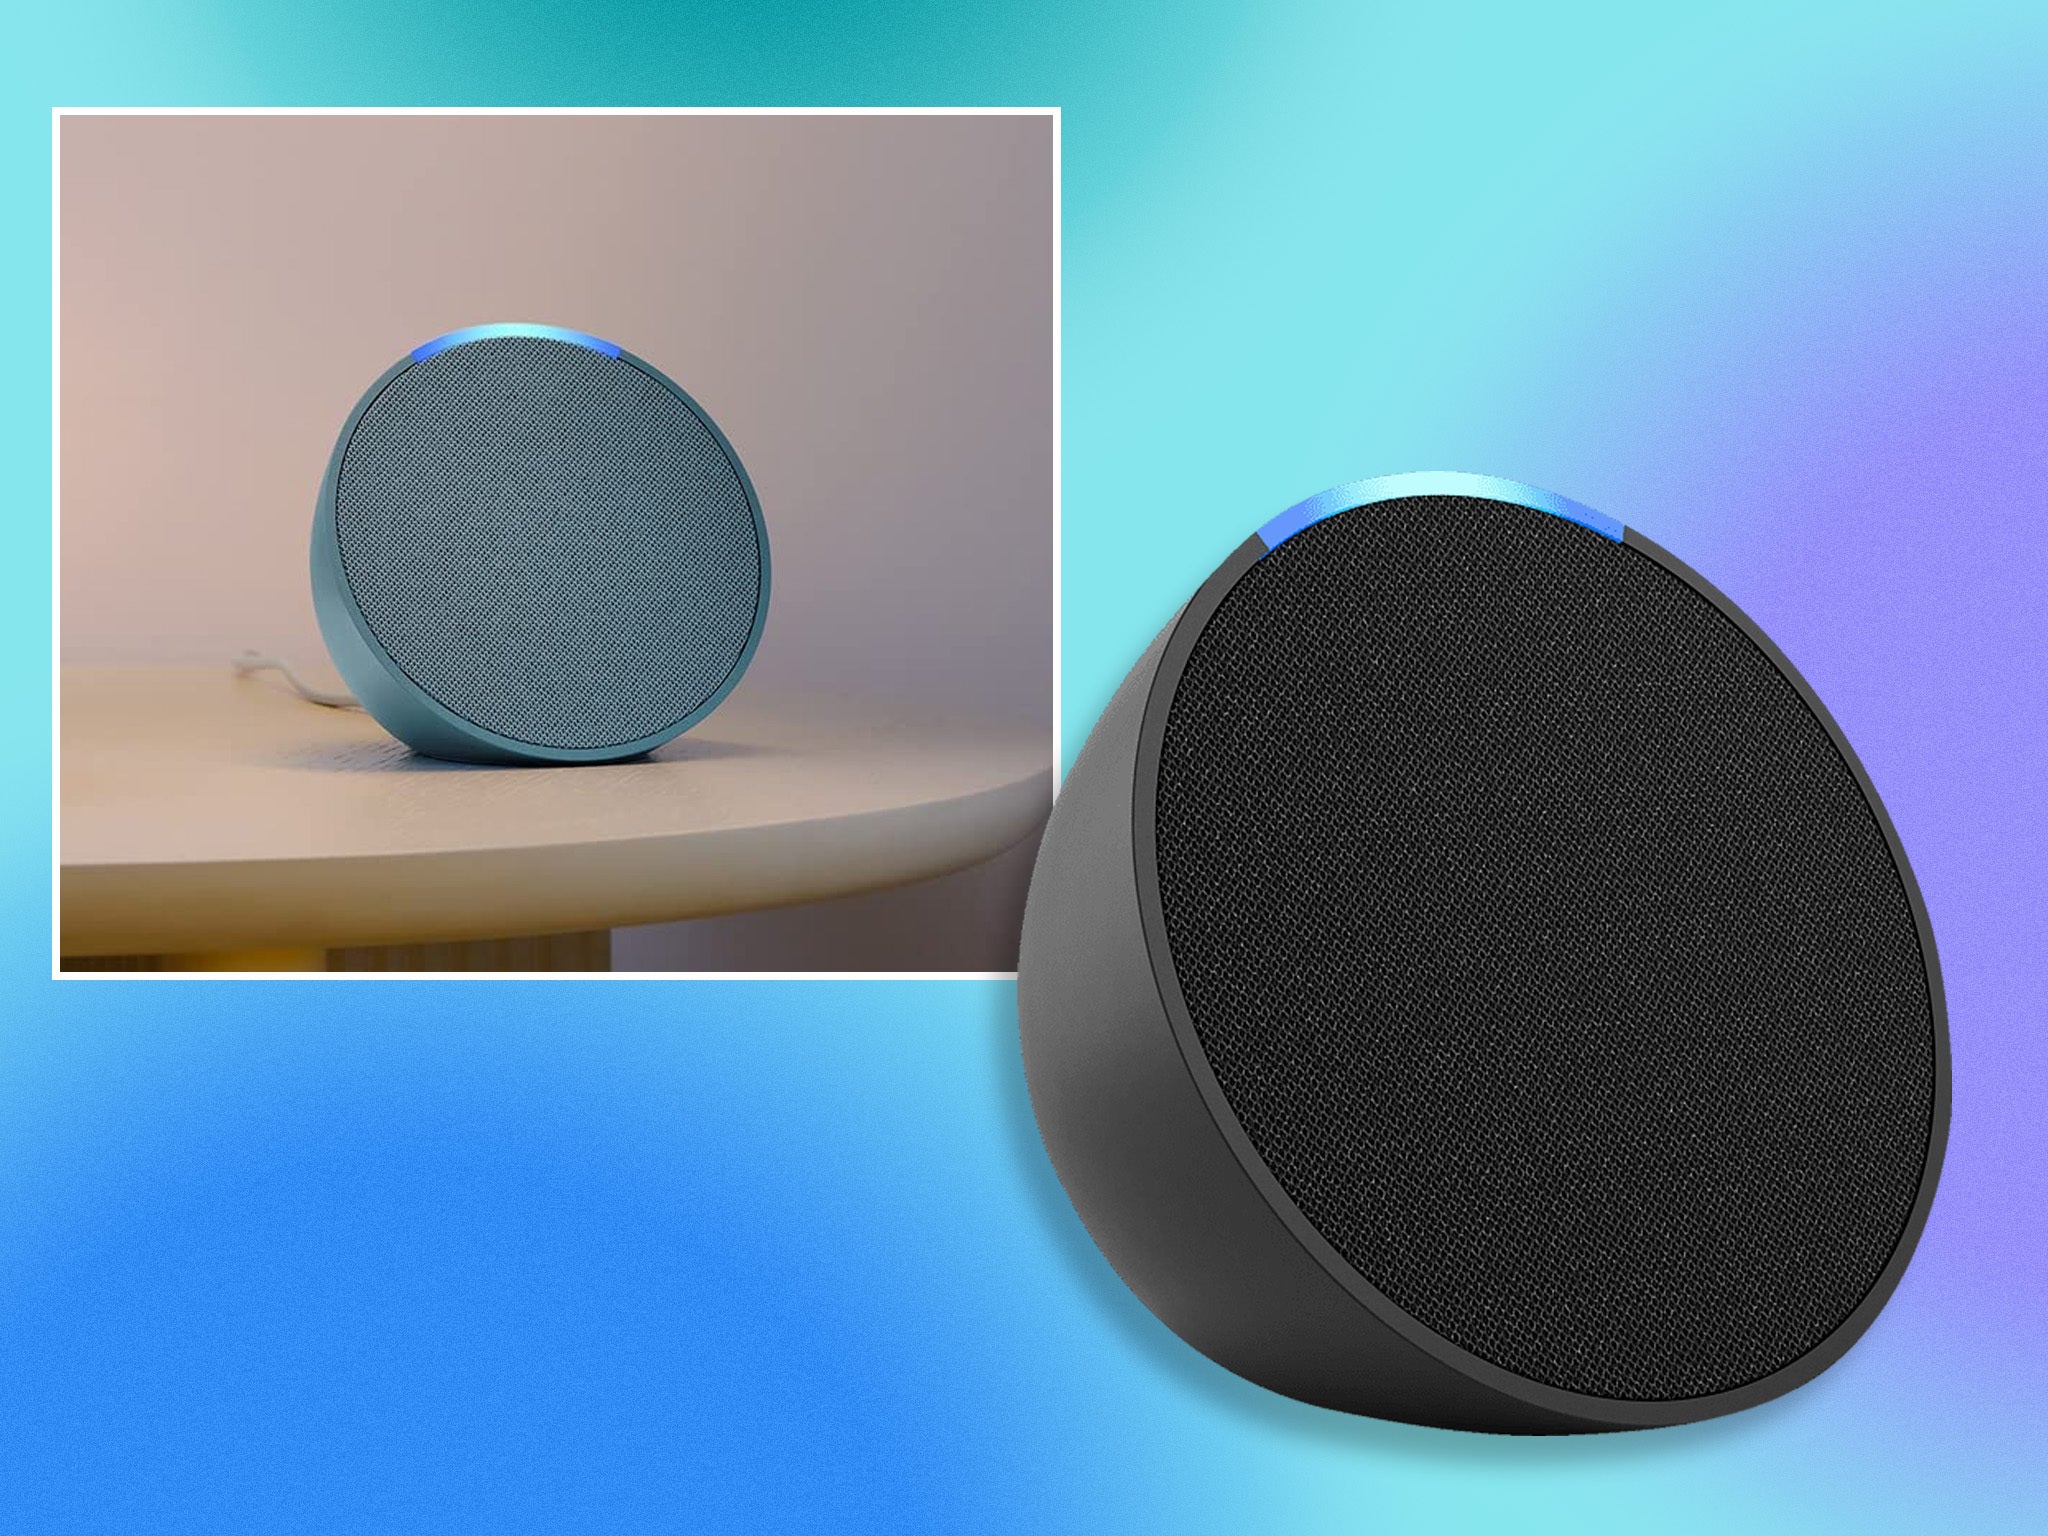 Echo Pop: The Stylish Smart Speaker with Alexa 